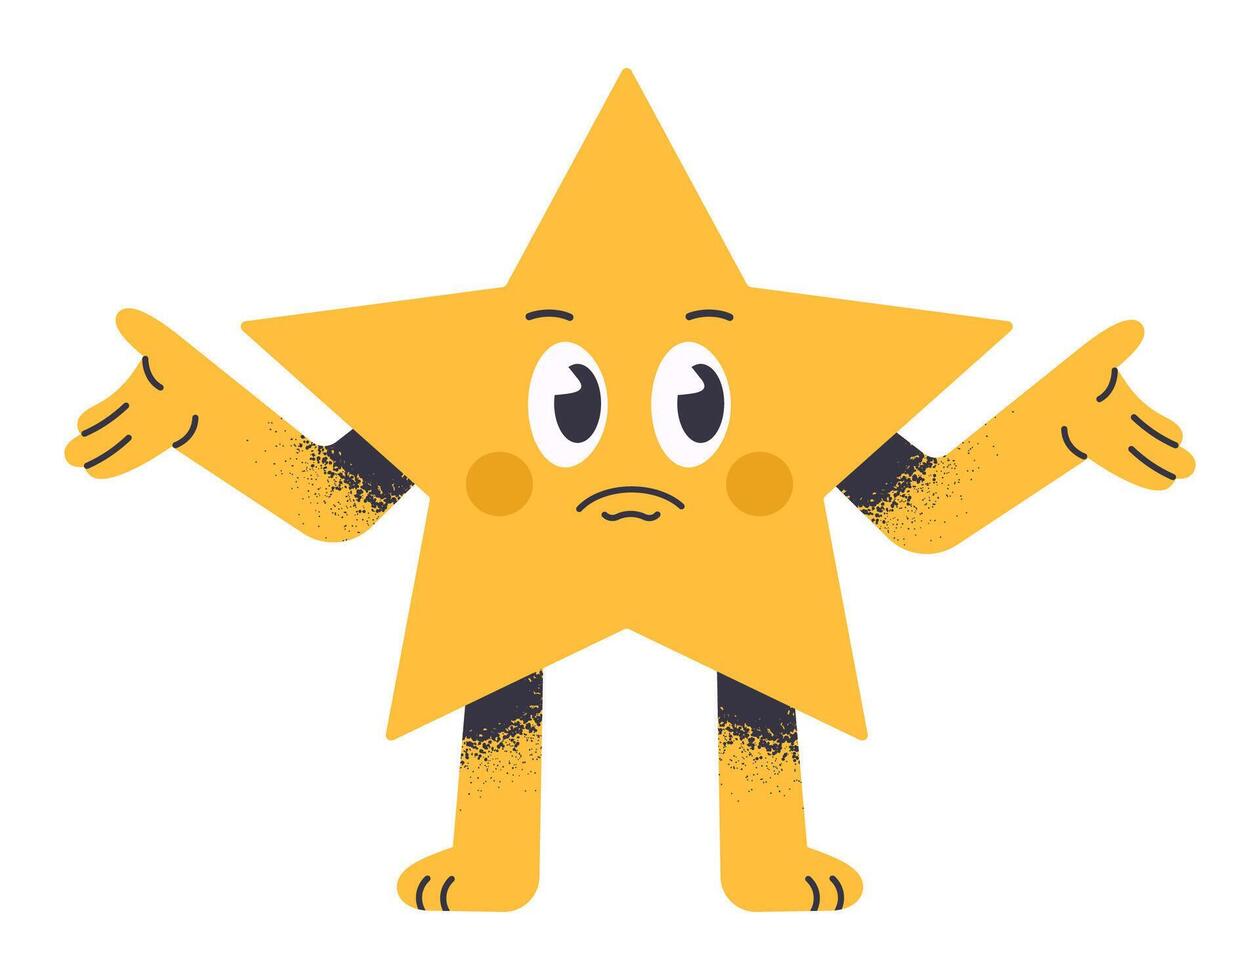 grappig ster karakter. meetkundig grappig mascotte, grappig geel ster vorm met verwarring emotie vlak illustratie. schattig ster mascotte met grappig gezicht vector